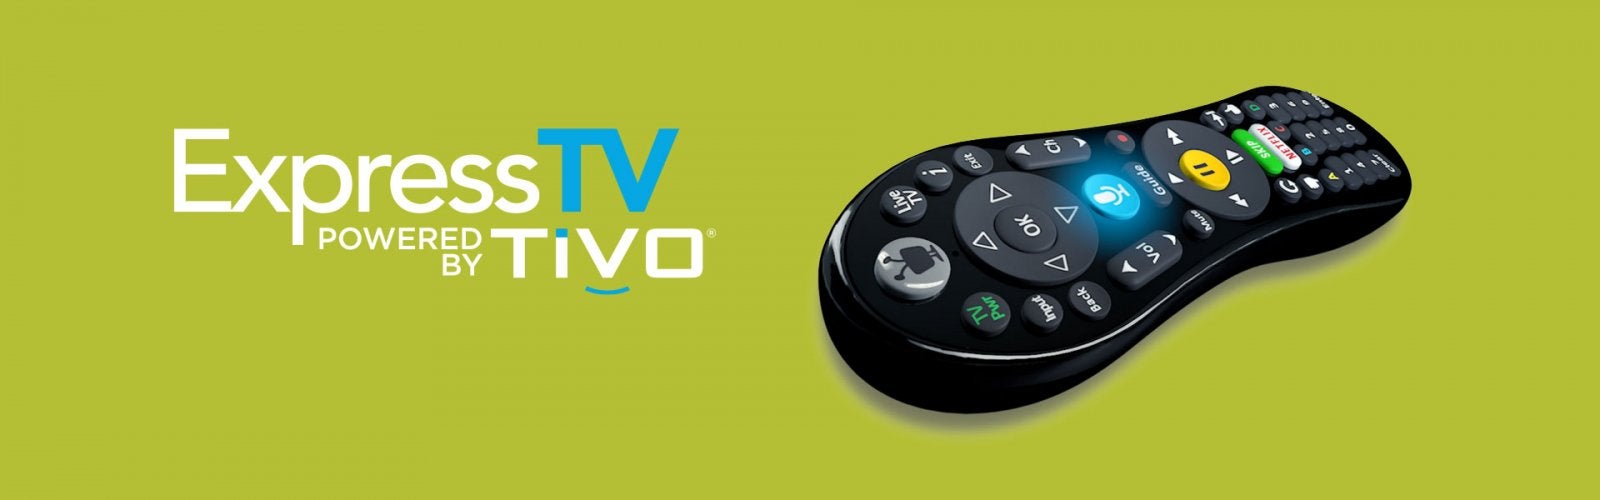 TiVo Experience 4 Voice Remote